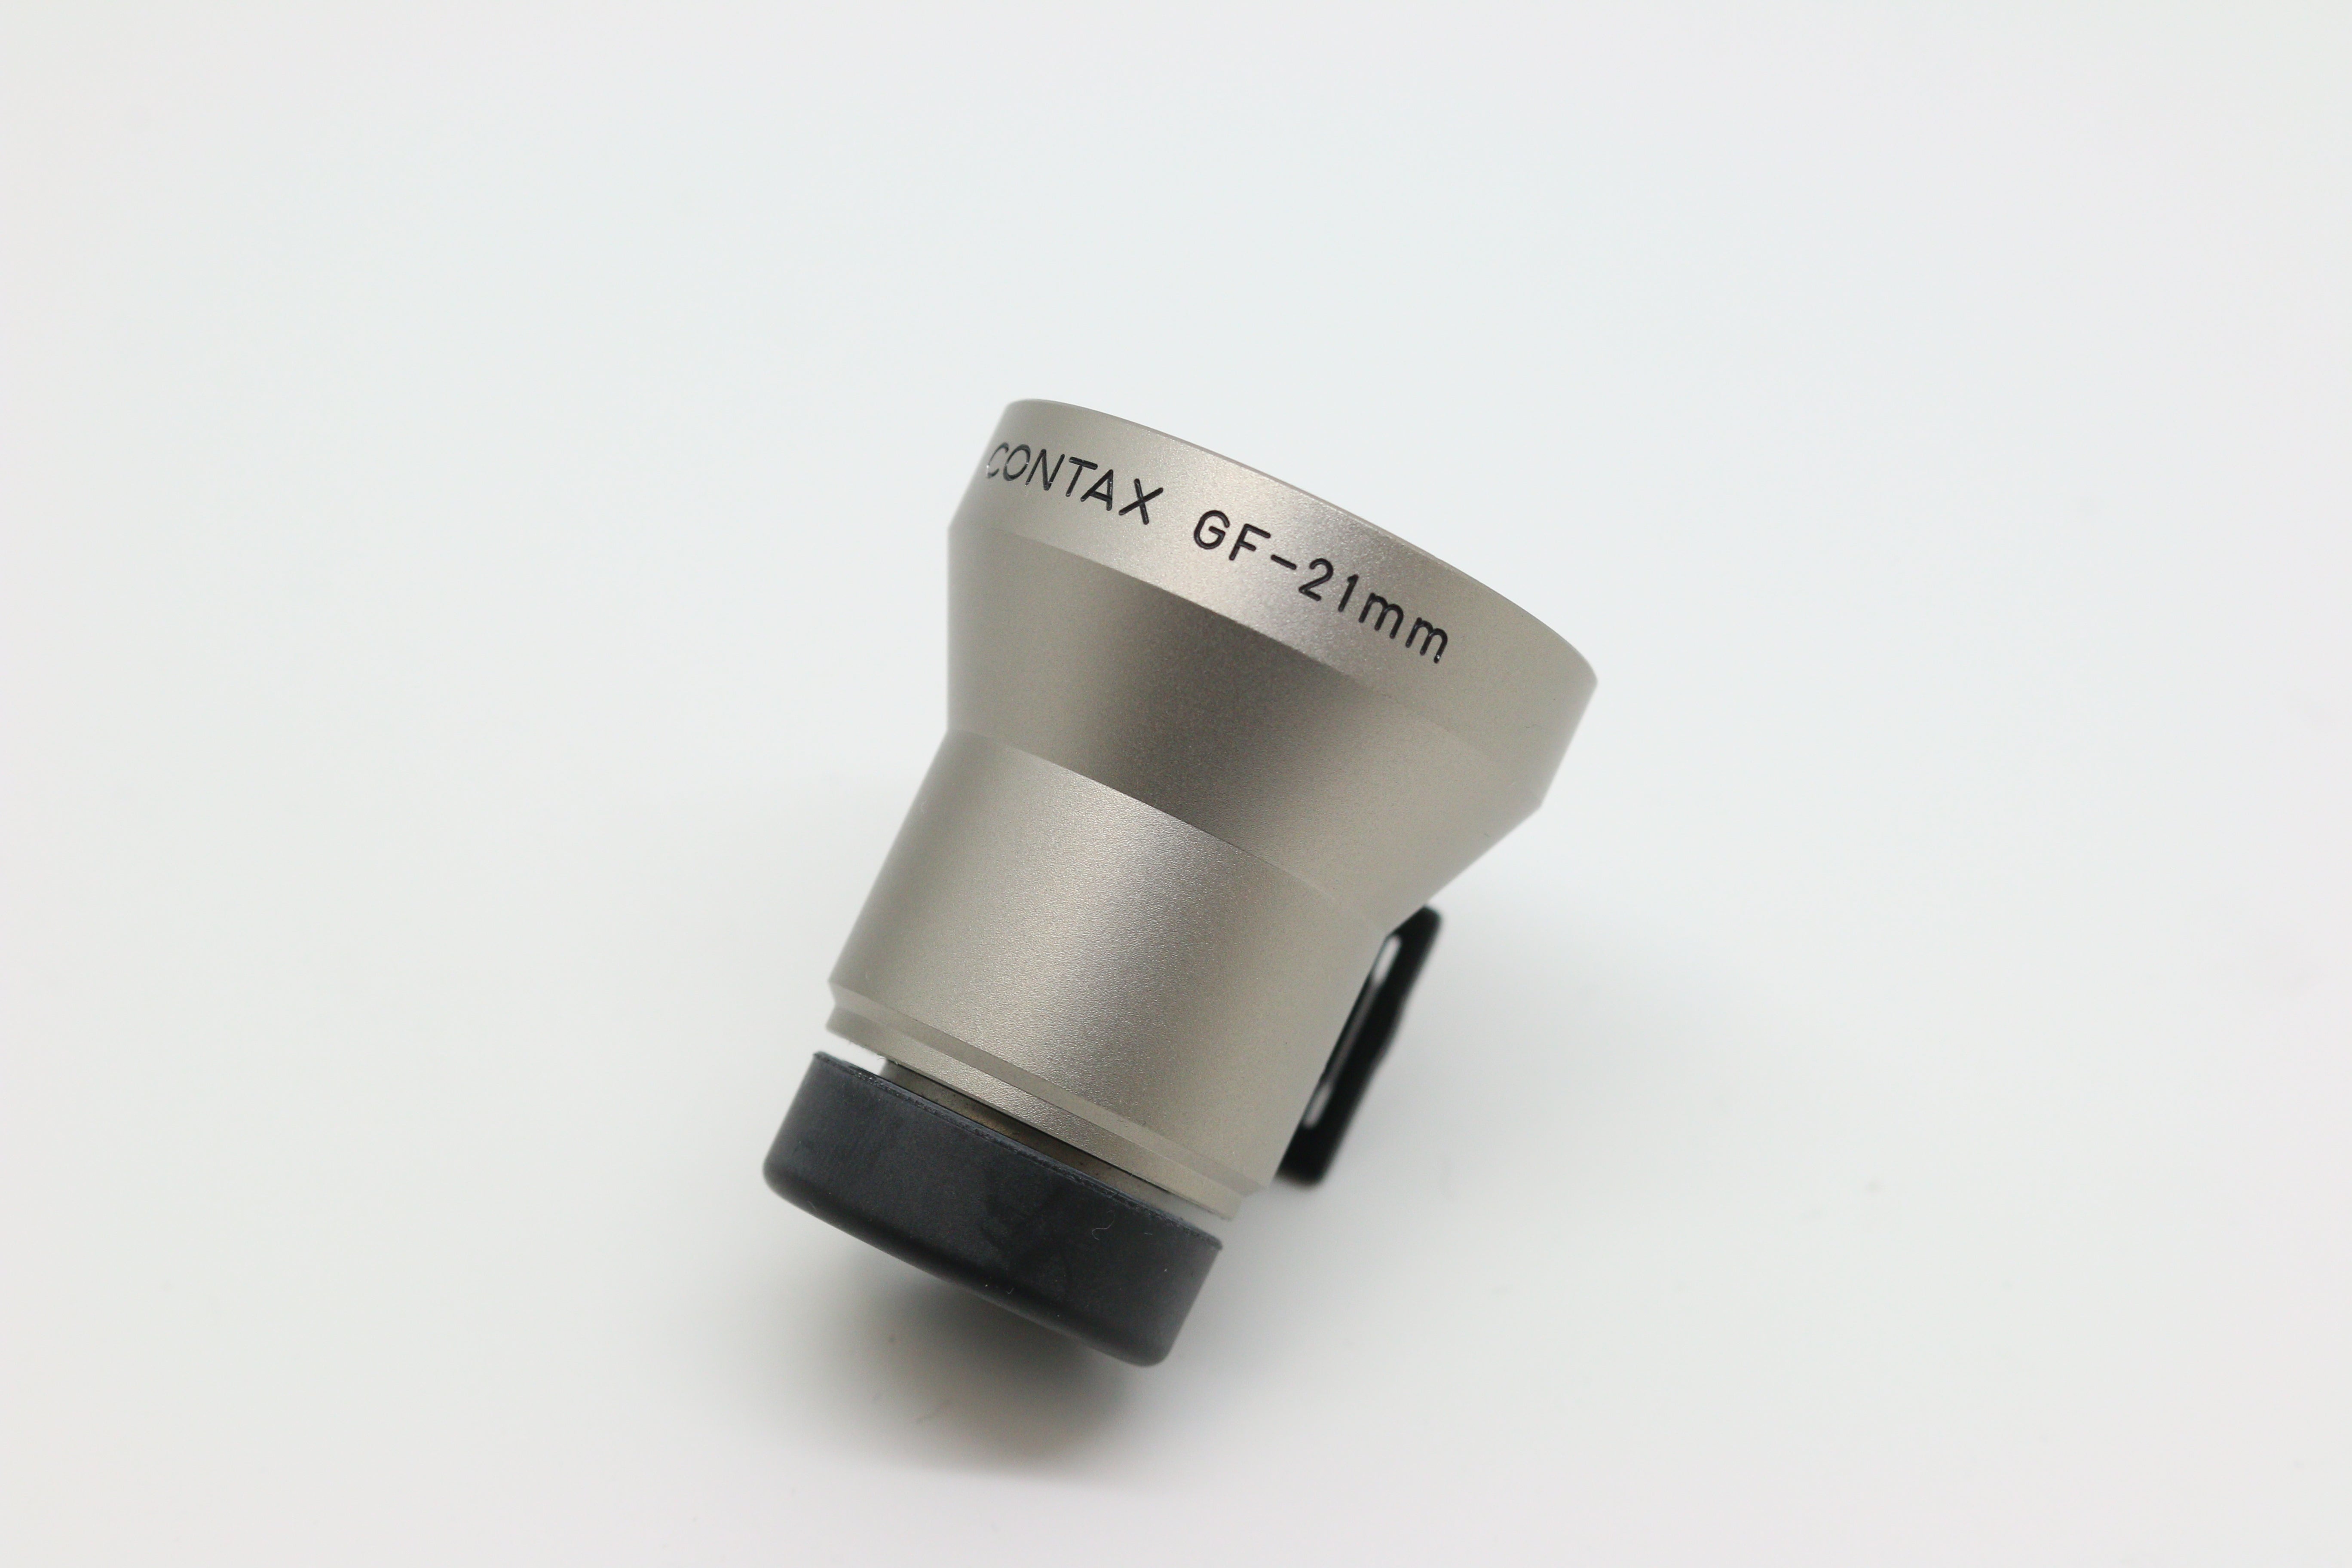 Contax Zeiss 21mm f/2.8 Biogon with GF-21 finder